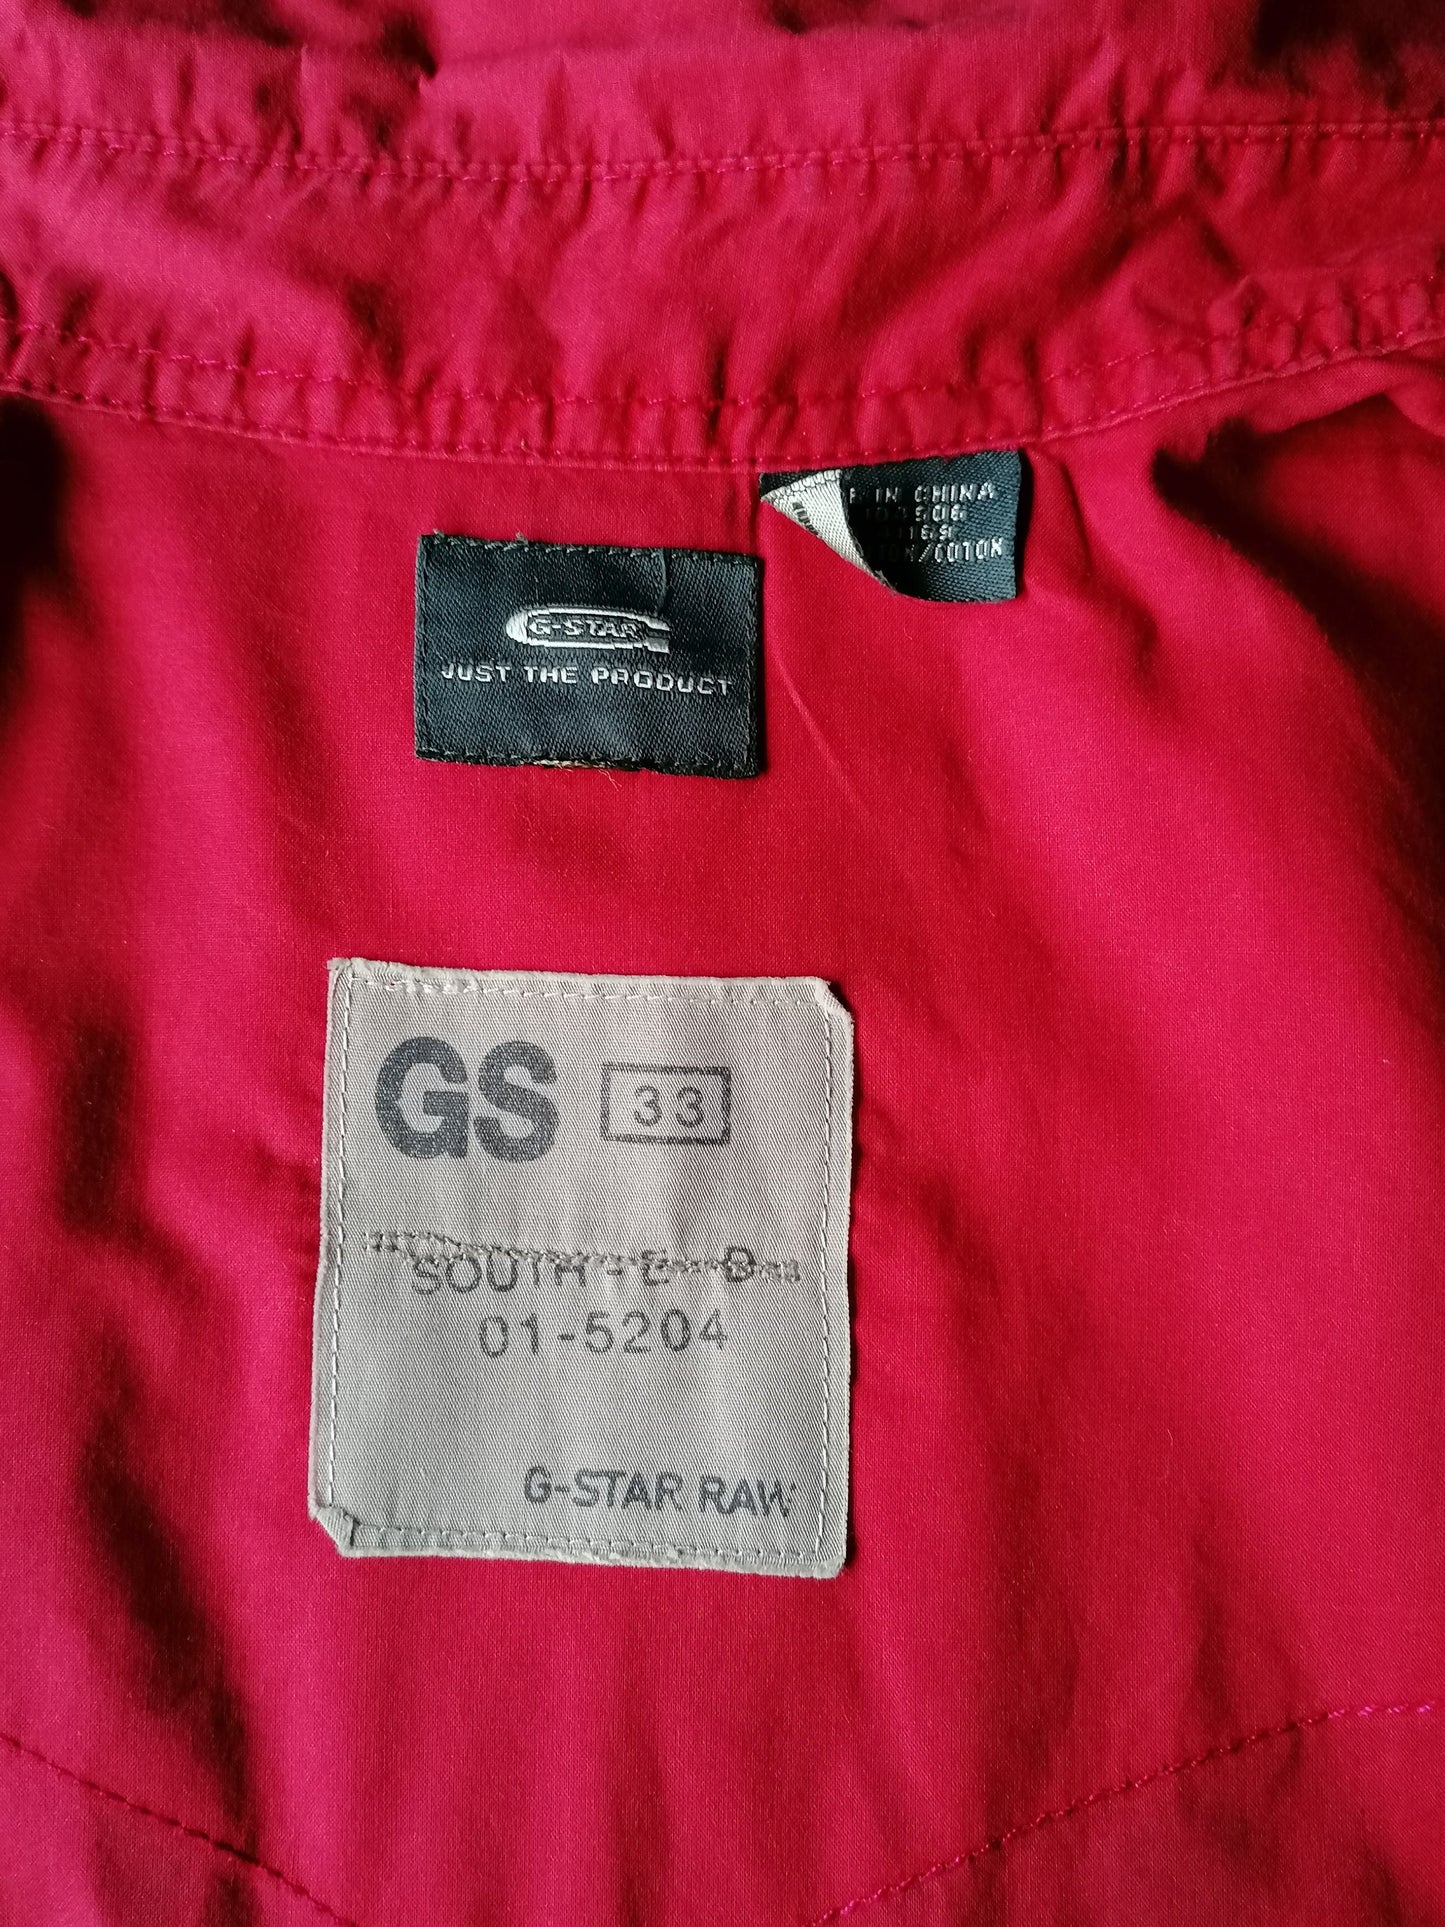 G-Star Raw overhemd korte mouw en drukknopen. Rood gekleurd. Maat XL.